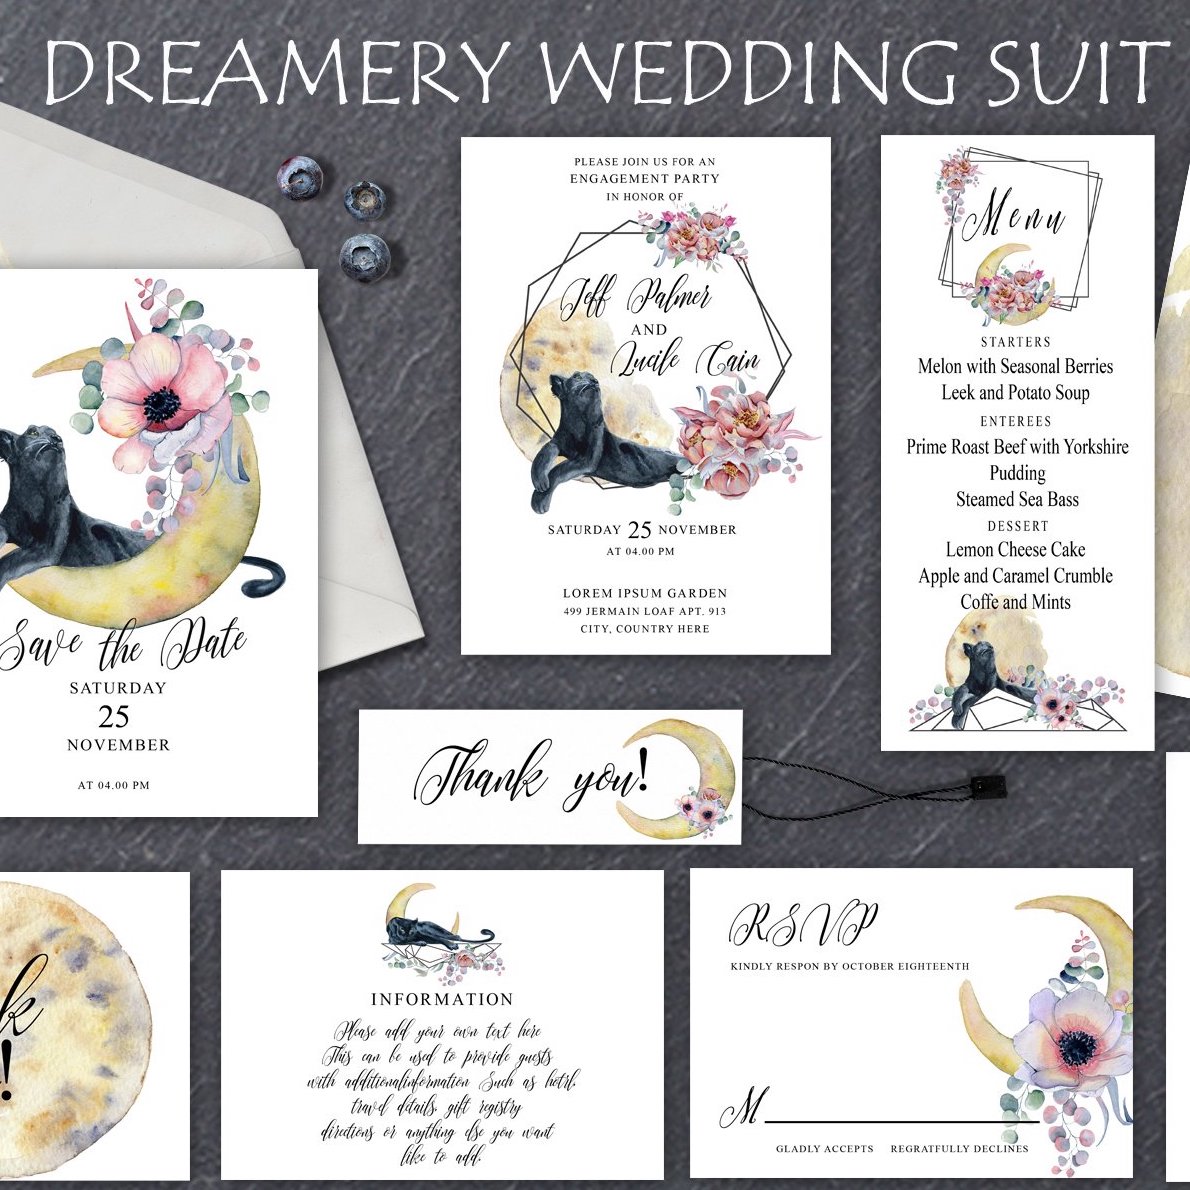 dreamery wedding suit 1